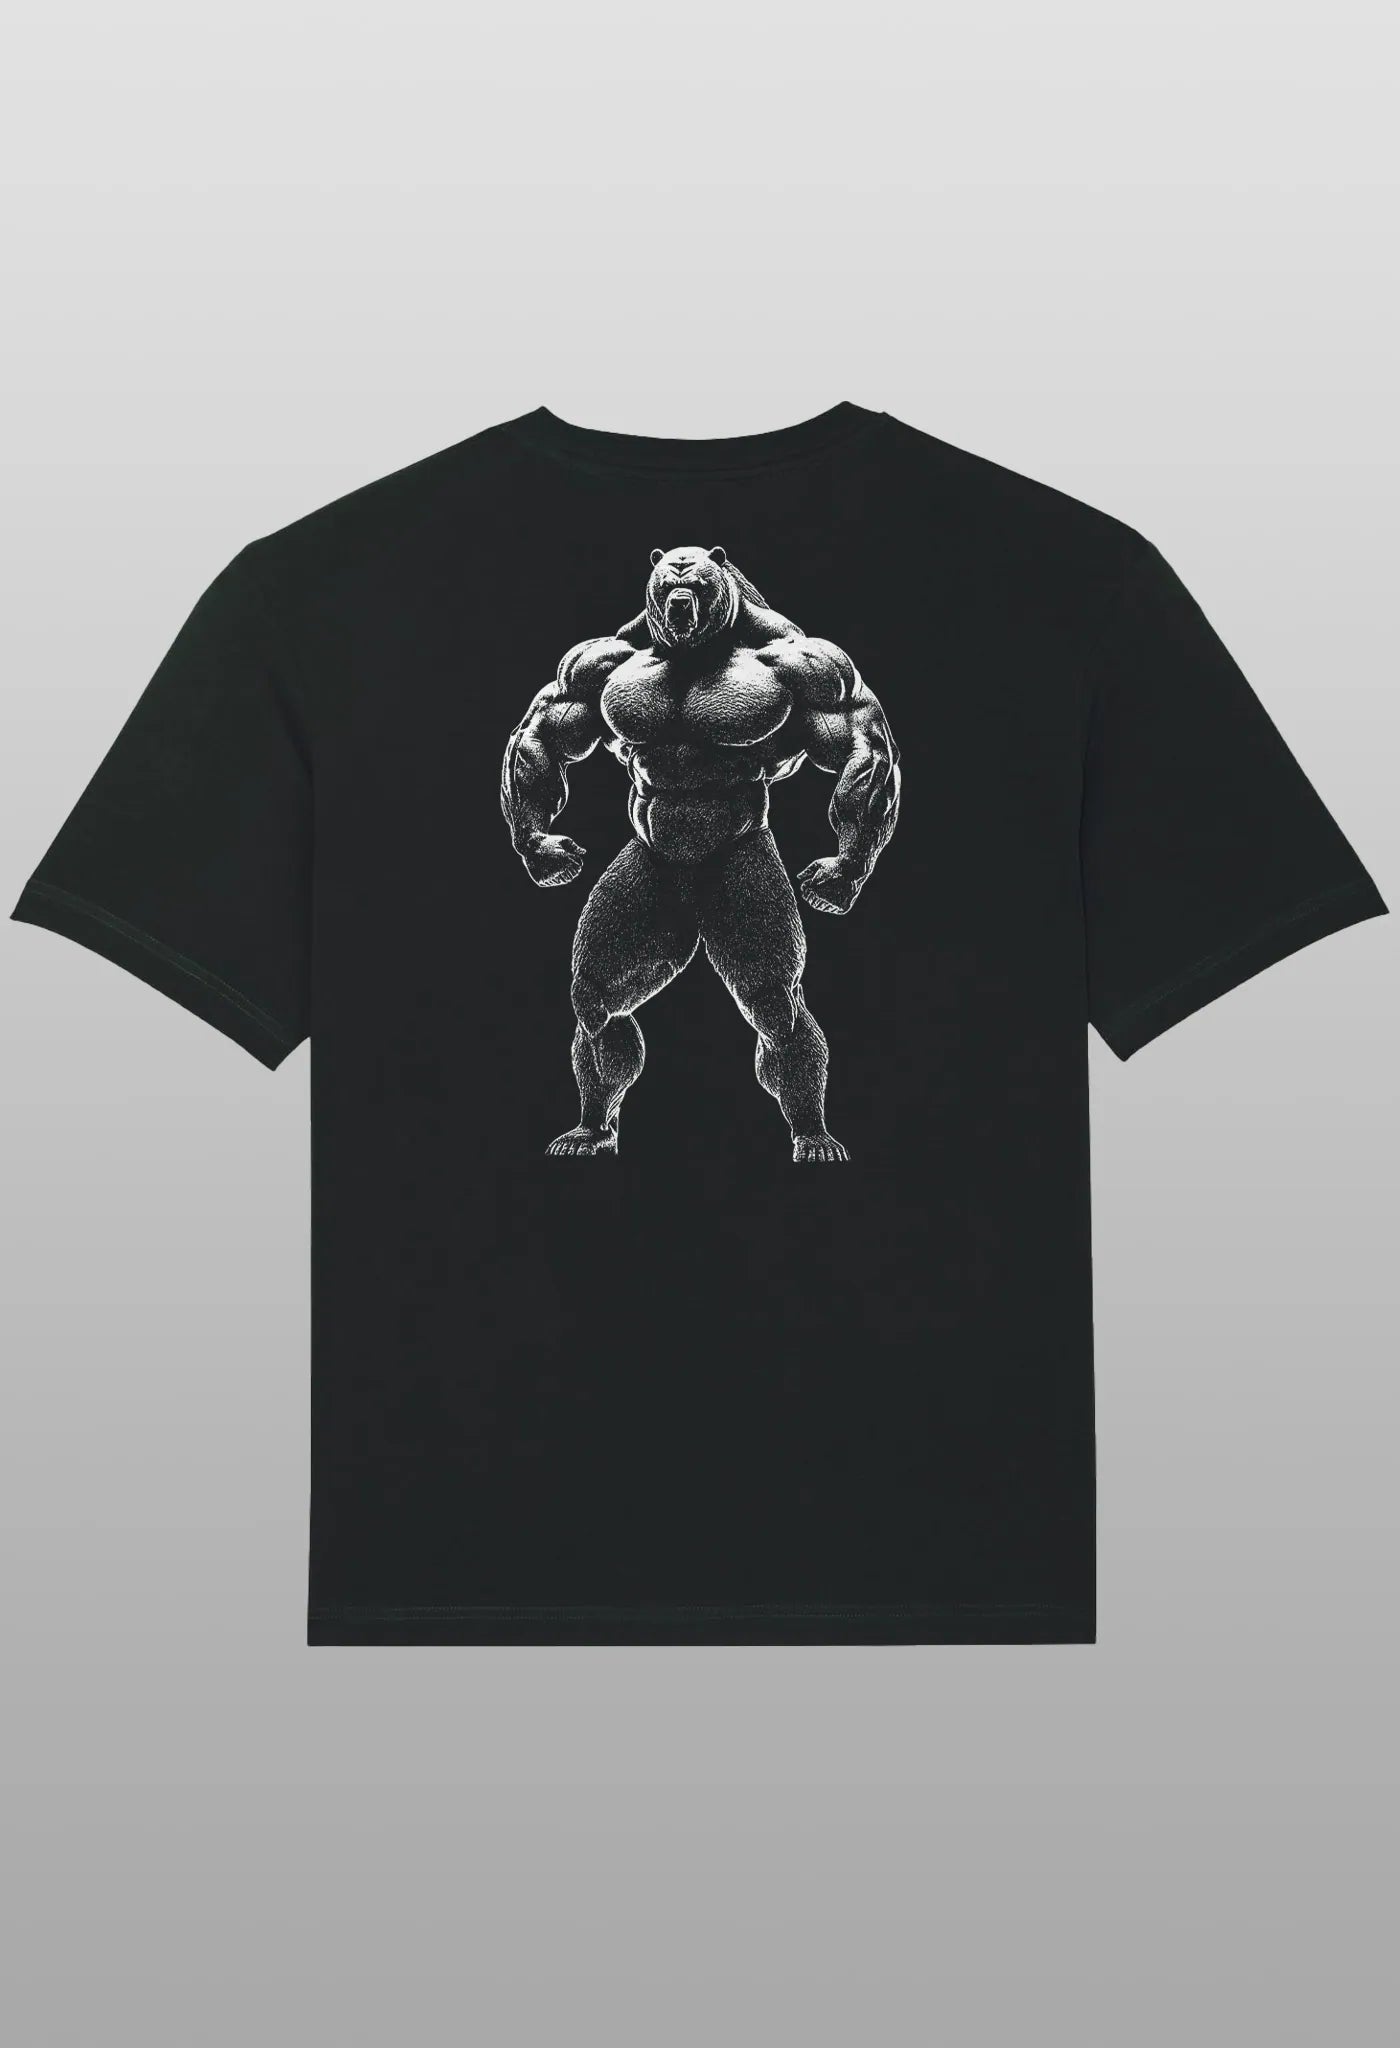 T-Shirt Gym Animal Grizzly Bear Bodybuilding Bär black